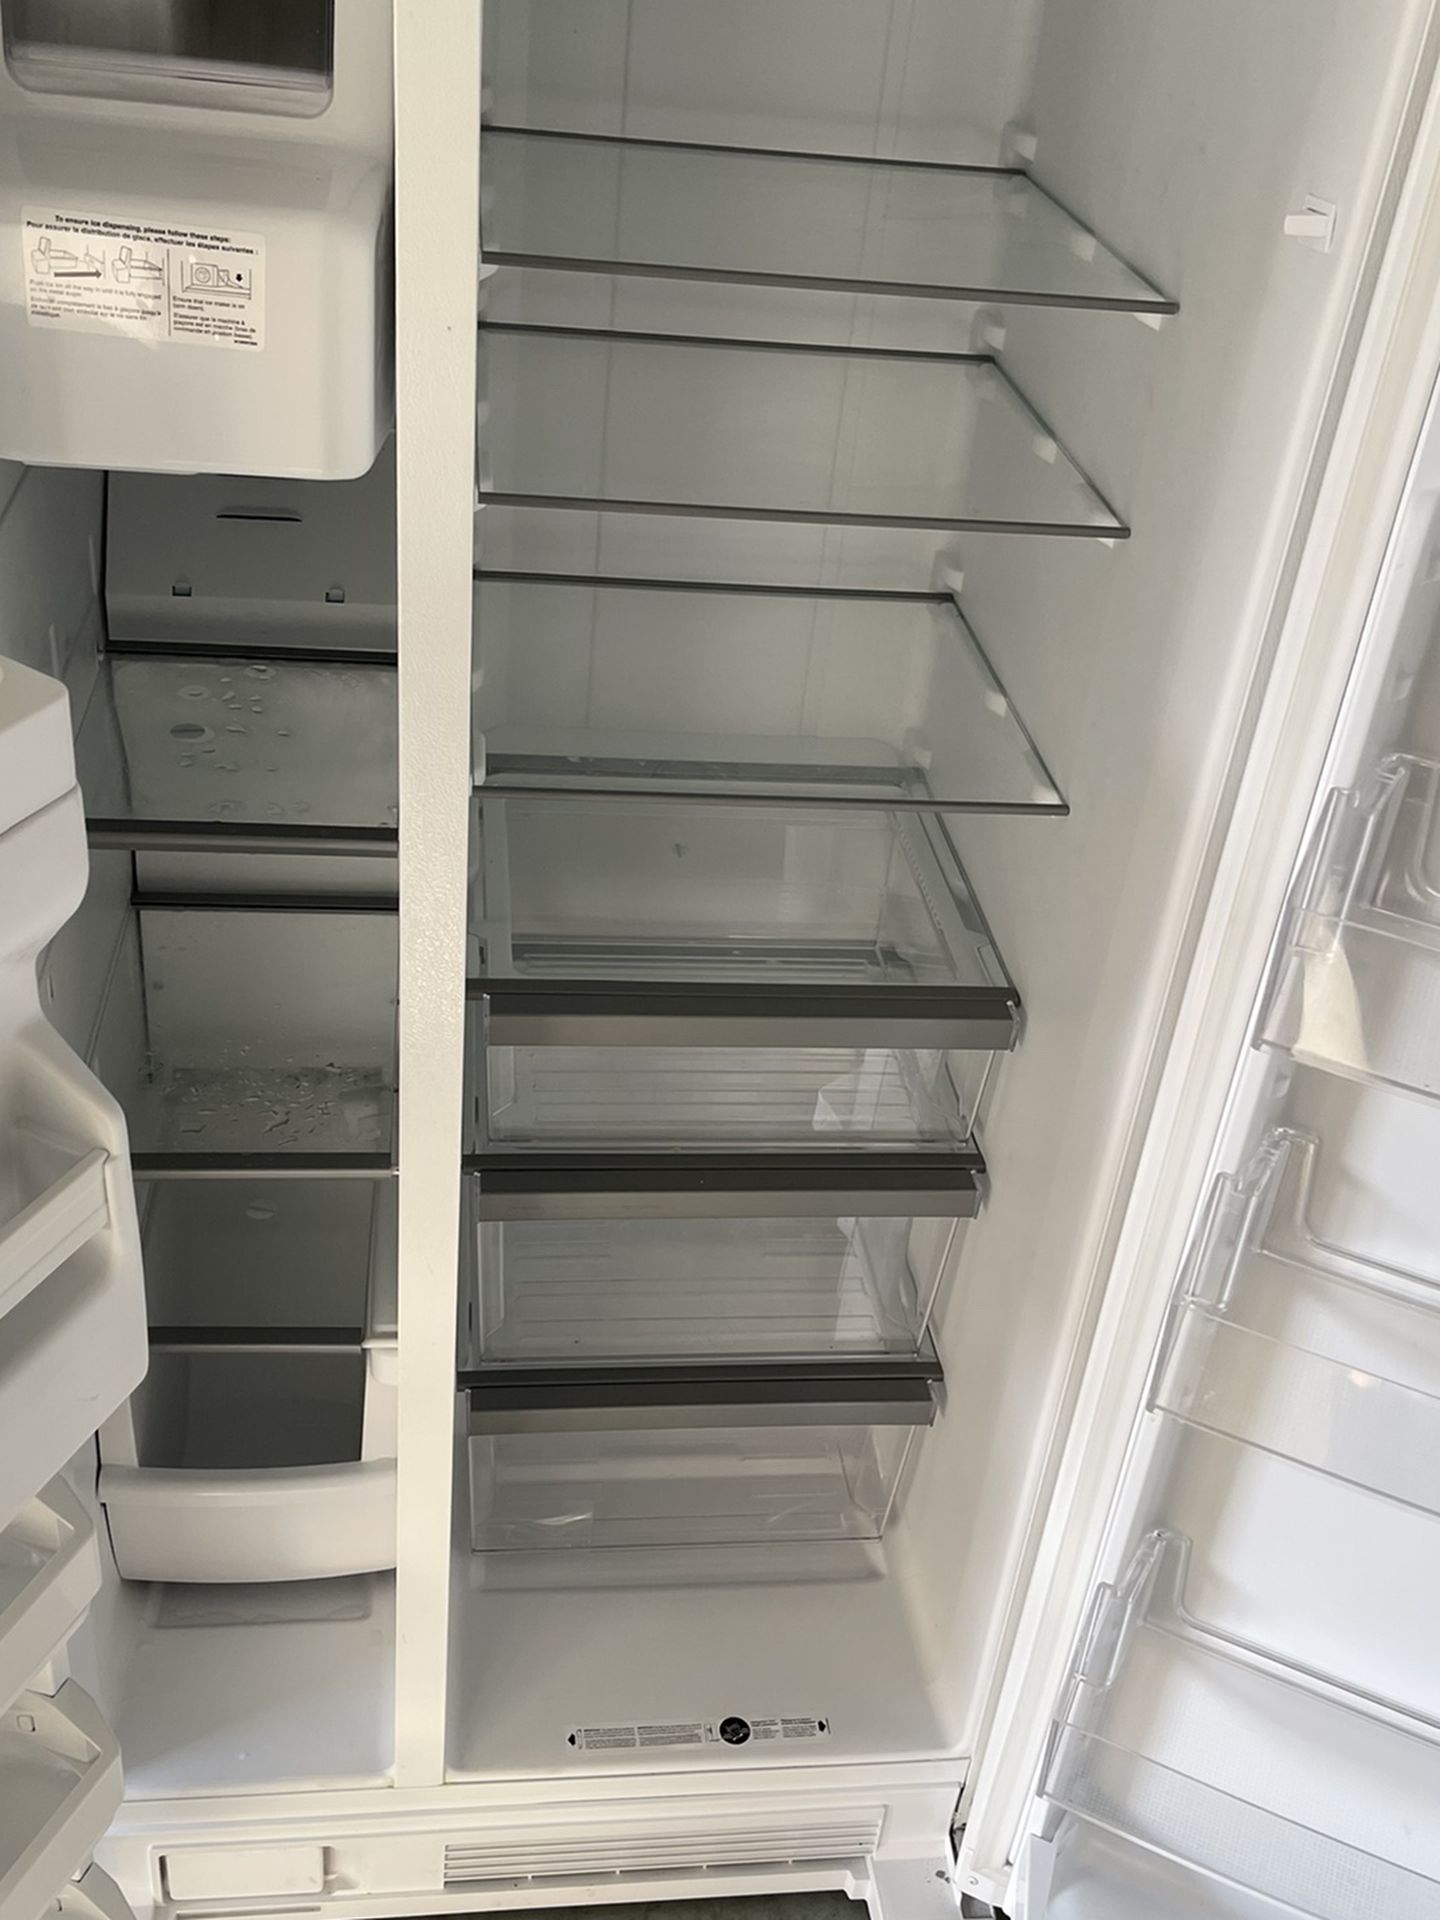 Refrigerator Whirlpool Work Perfect